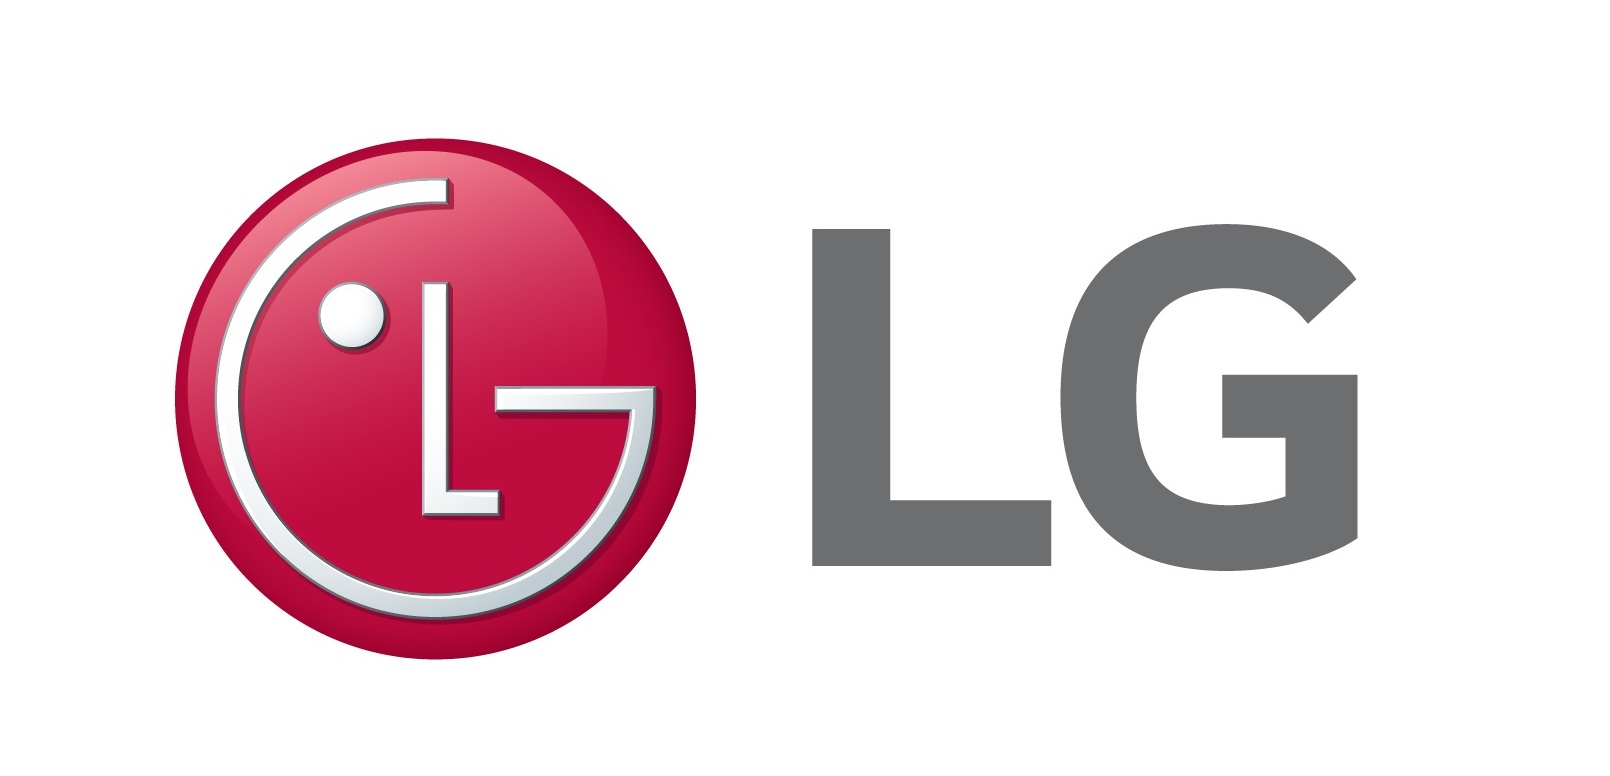 LG با Unity برای ارائه تجربیات جدید در فضای مجازی شریک می شود